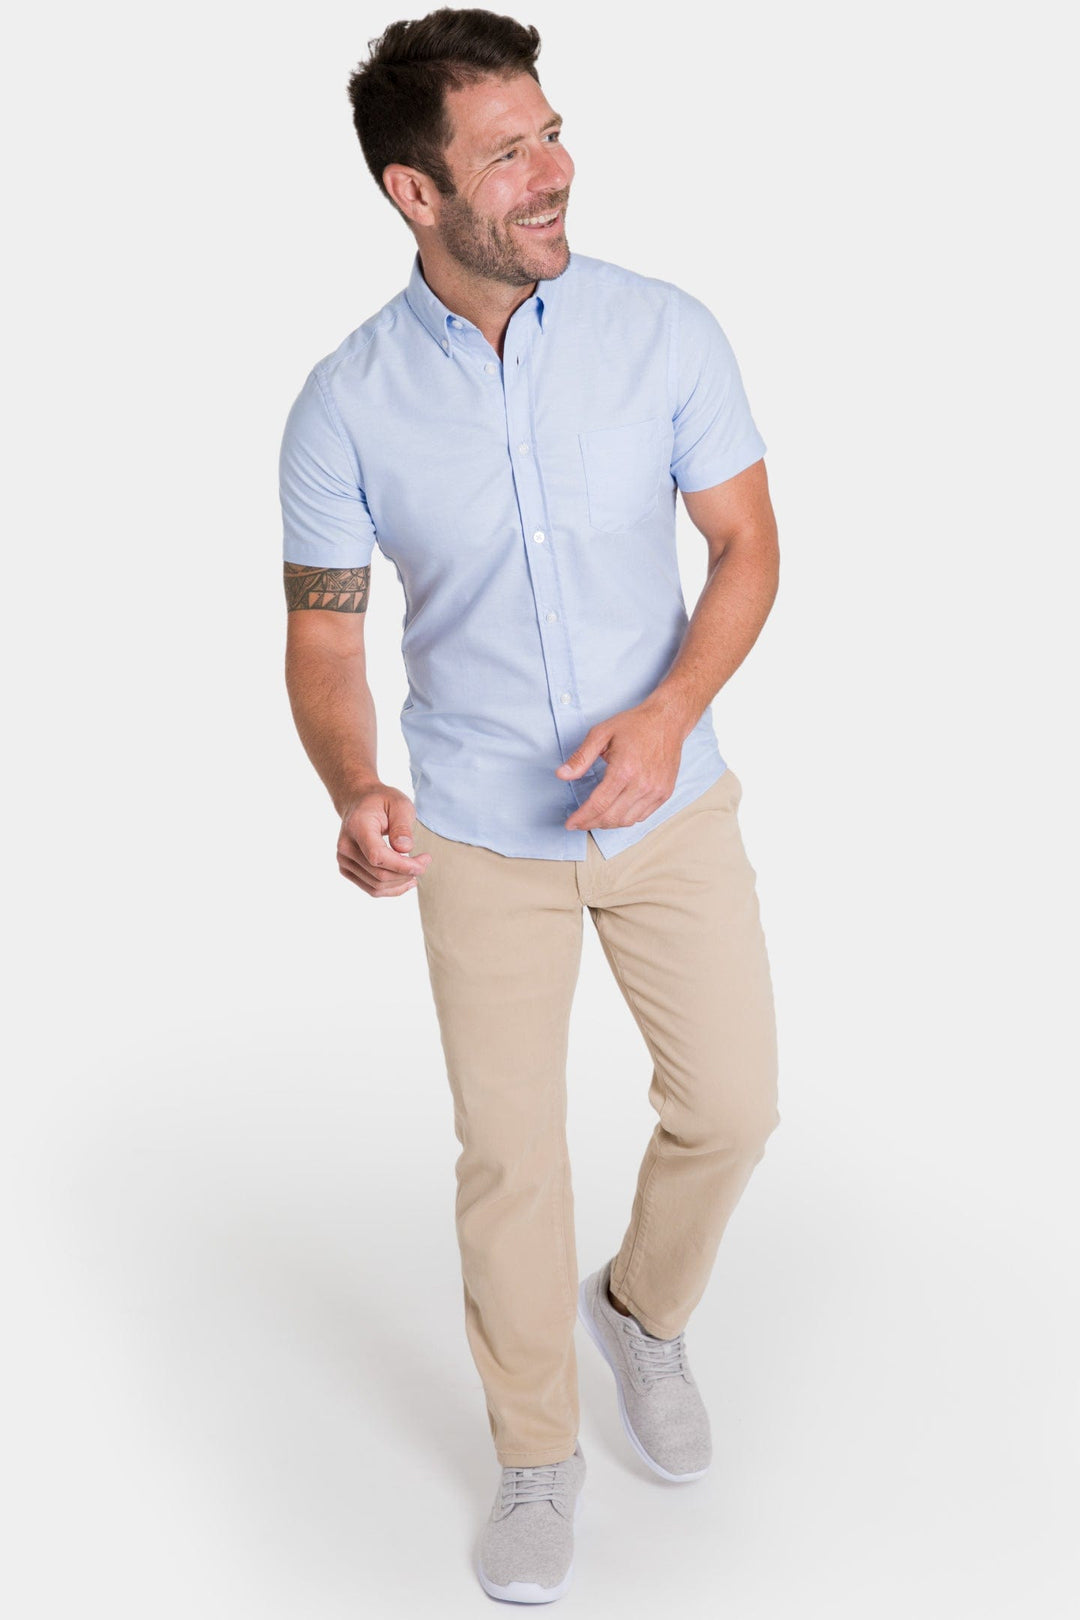 Ash & Erie Blue Oxford Wrinkle Free Short Sleeve Shirt for Short Men   Short Sleeve Everyday Shirts